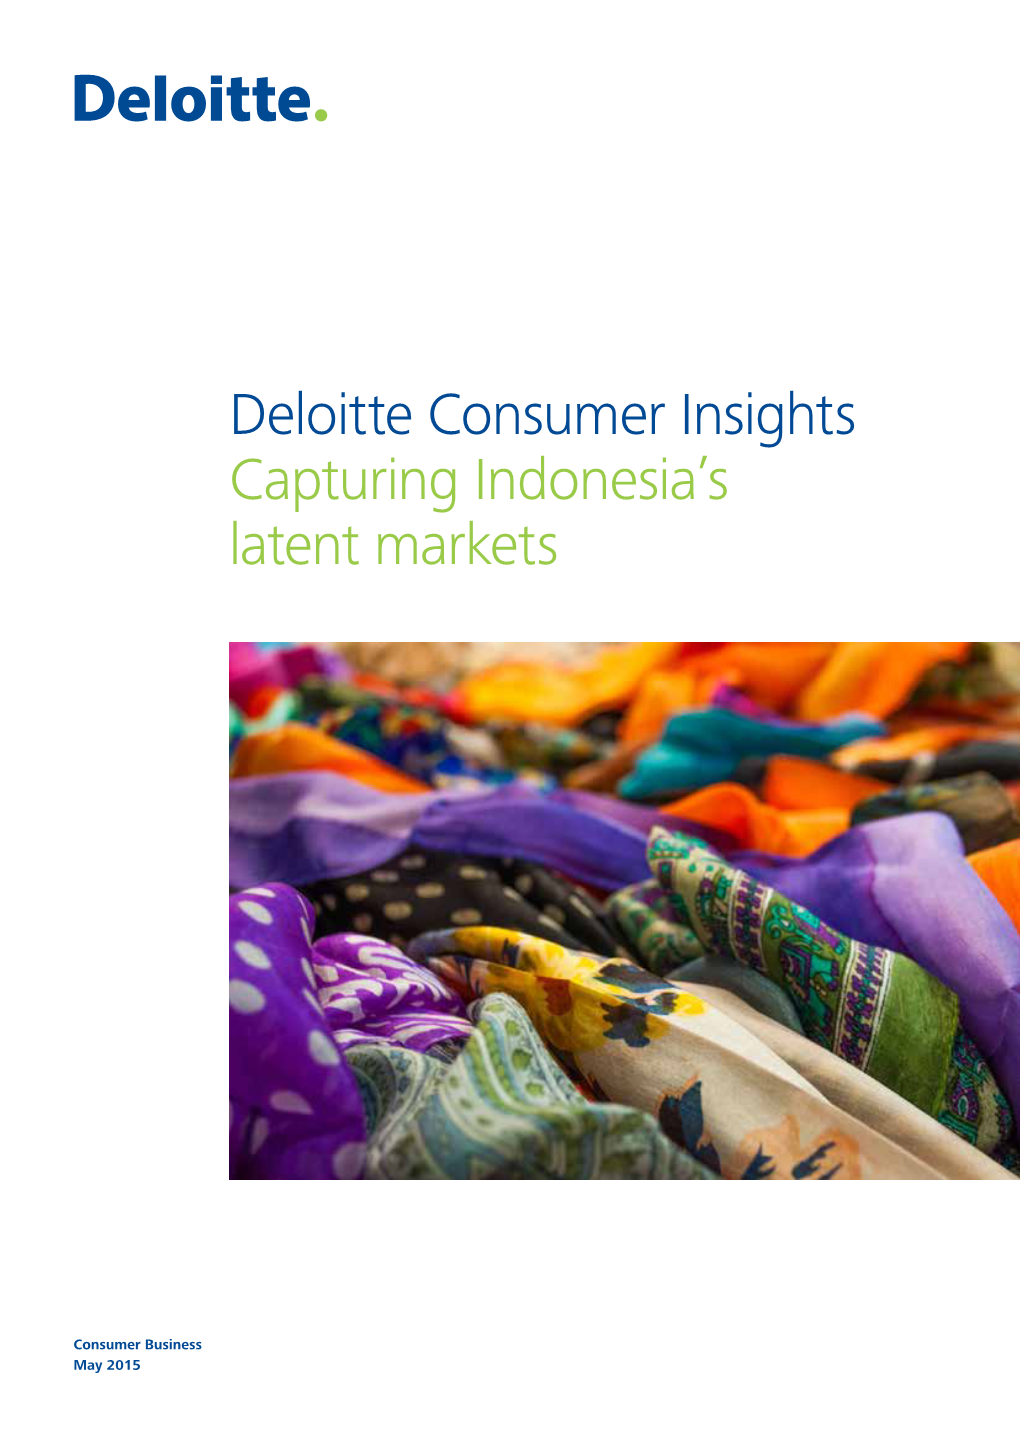 Deloitte Consumer Insights Capturing Indonesia's Latent Markets